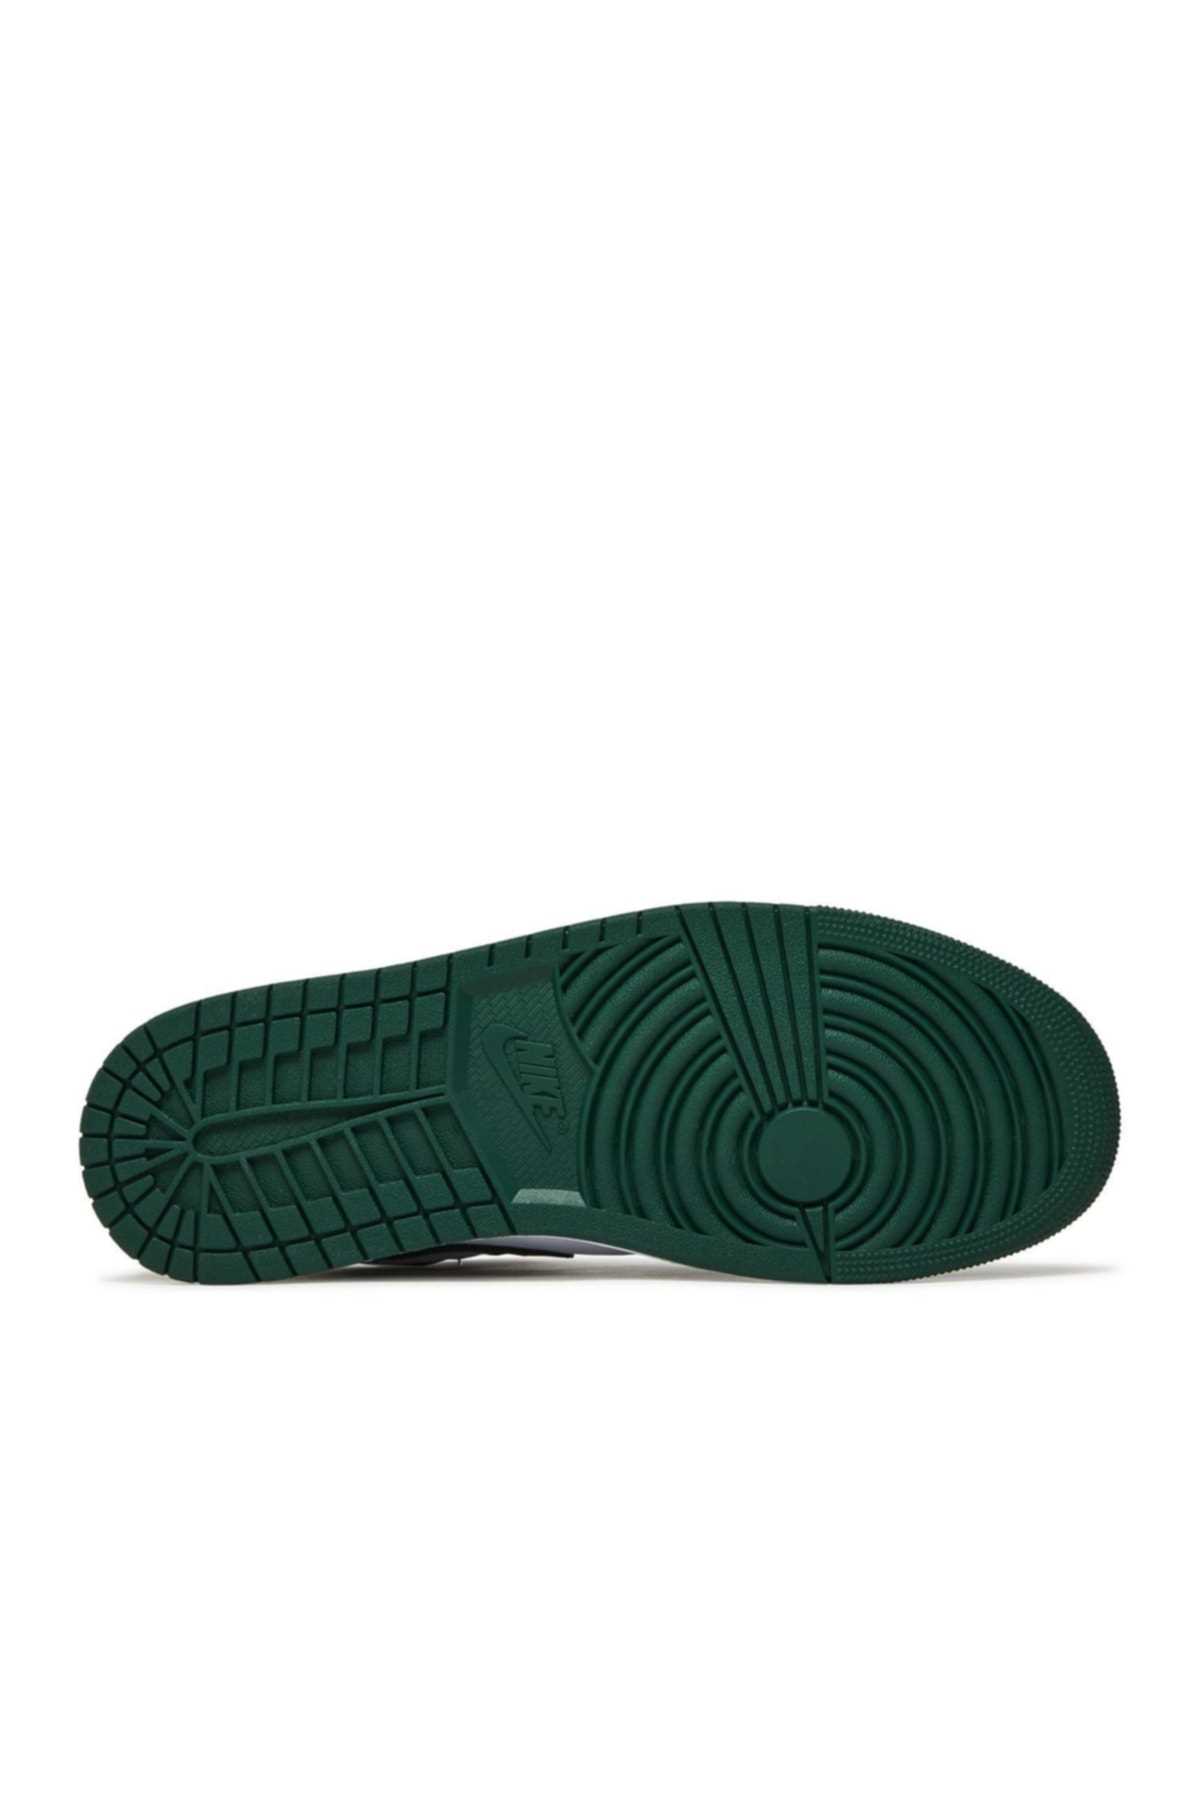 خرید نقدی کفش اسپرت مردانه برند نایک Yeşil-Beyaz-sarı ty257077061